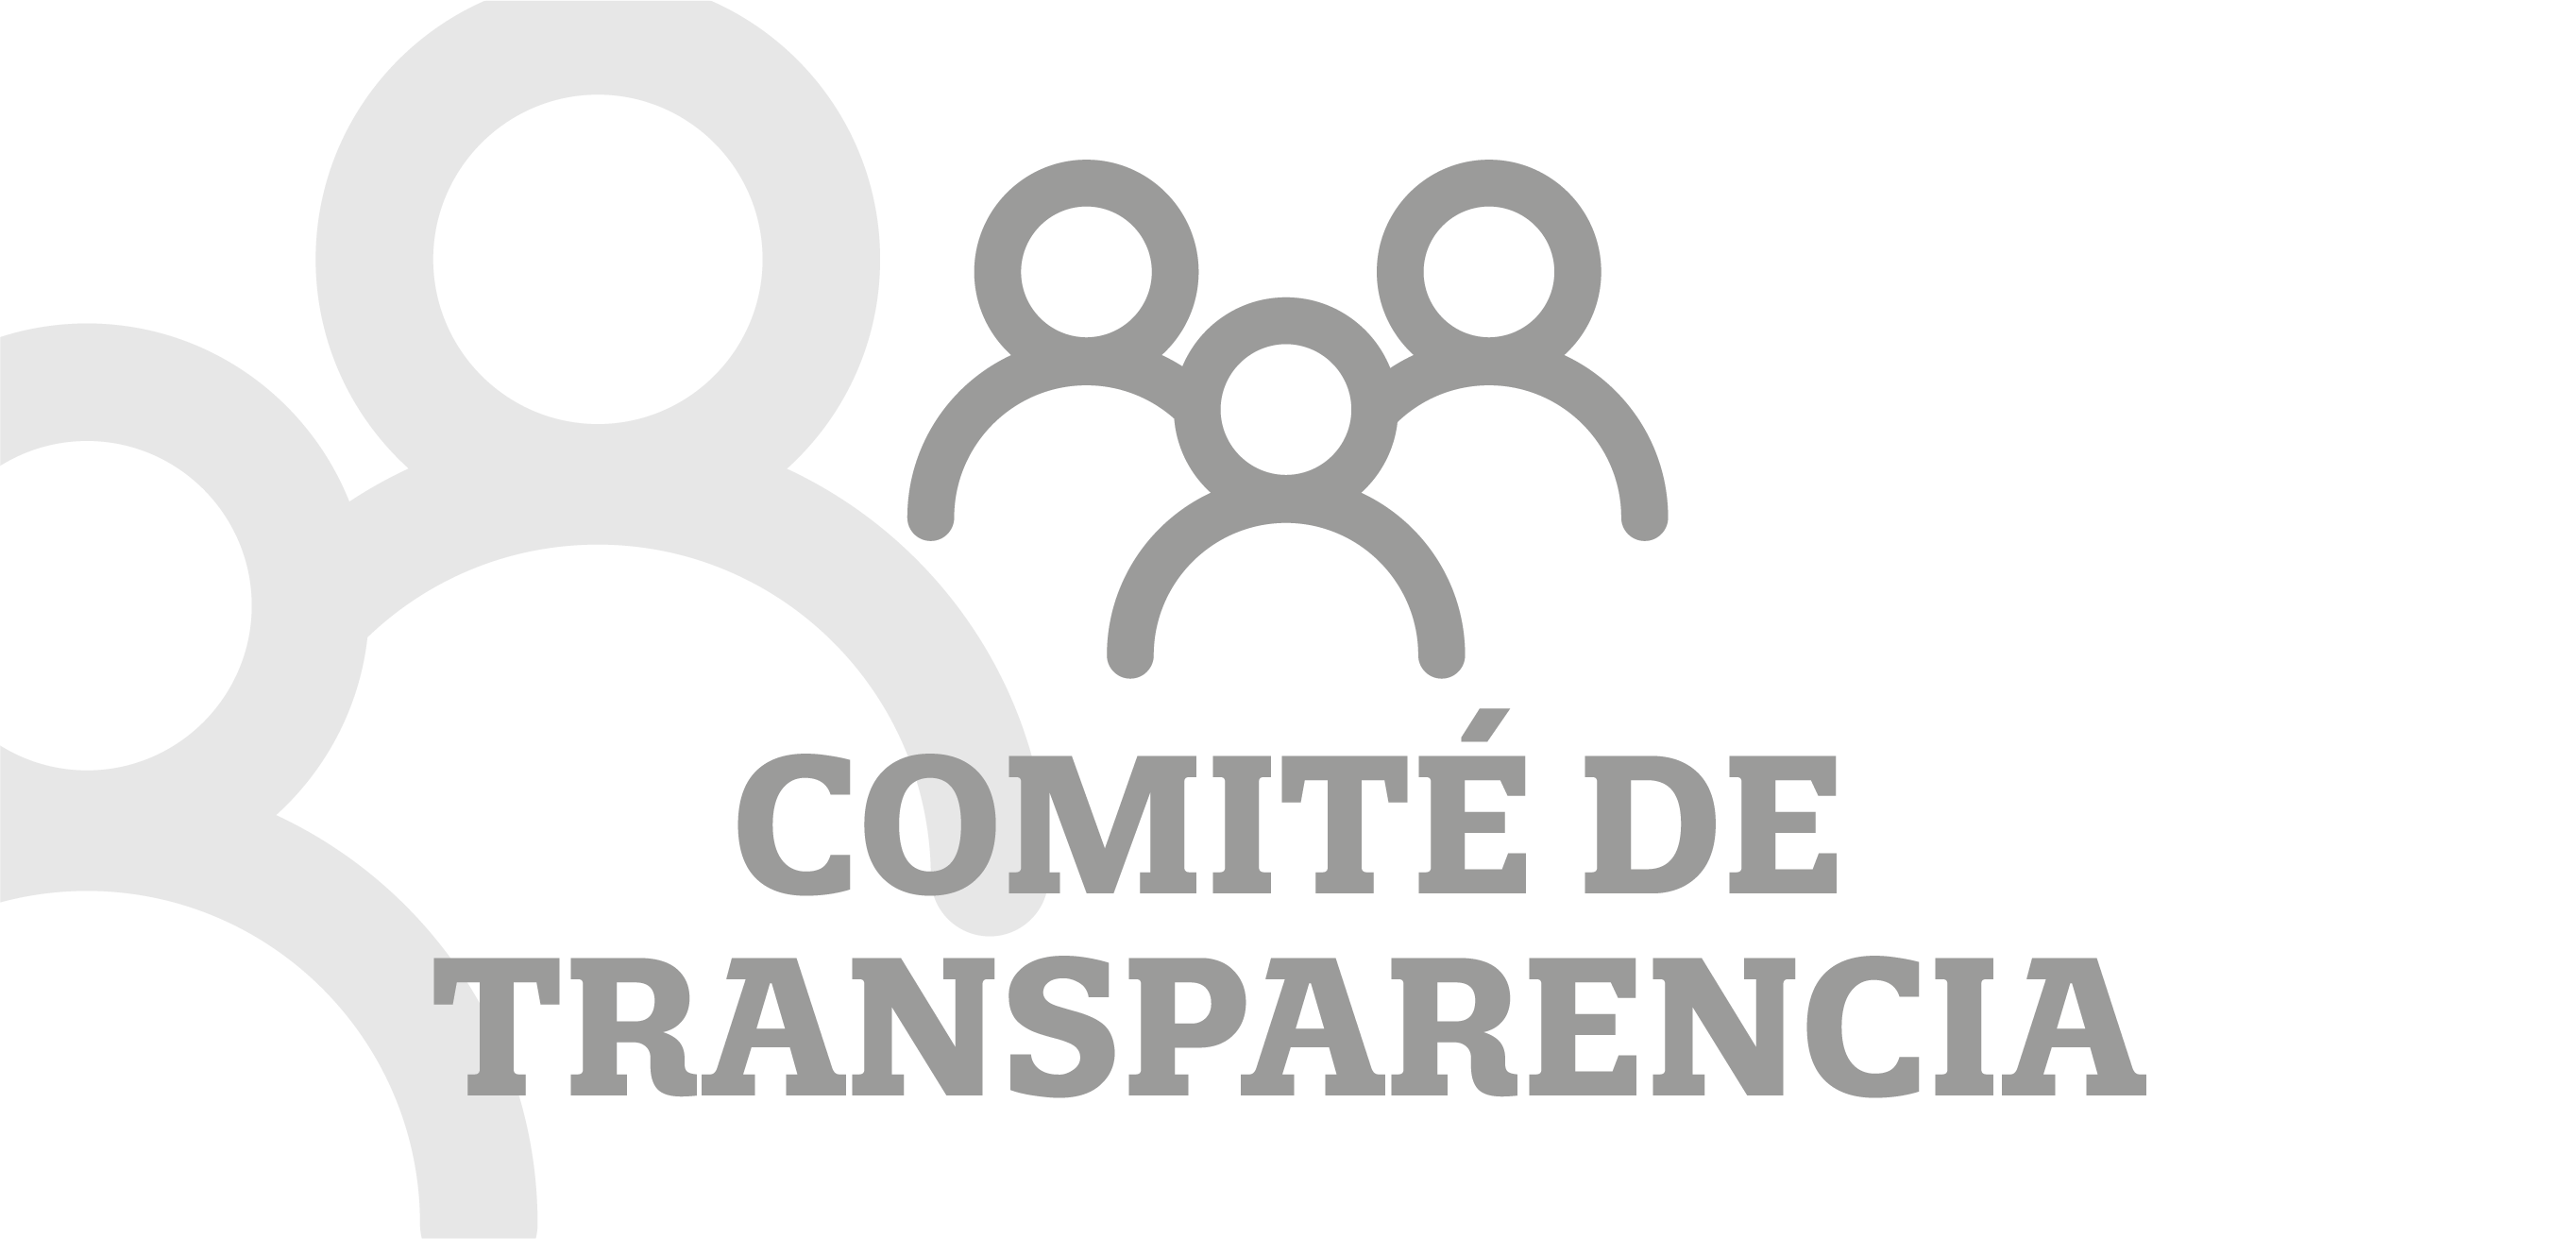 Comite Transparencia